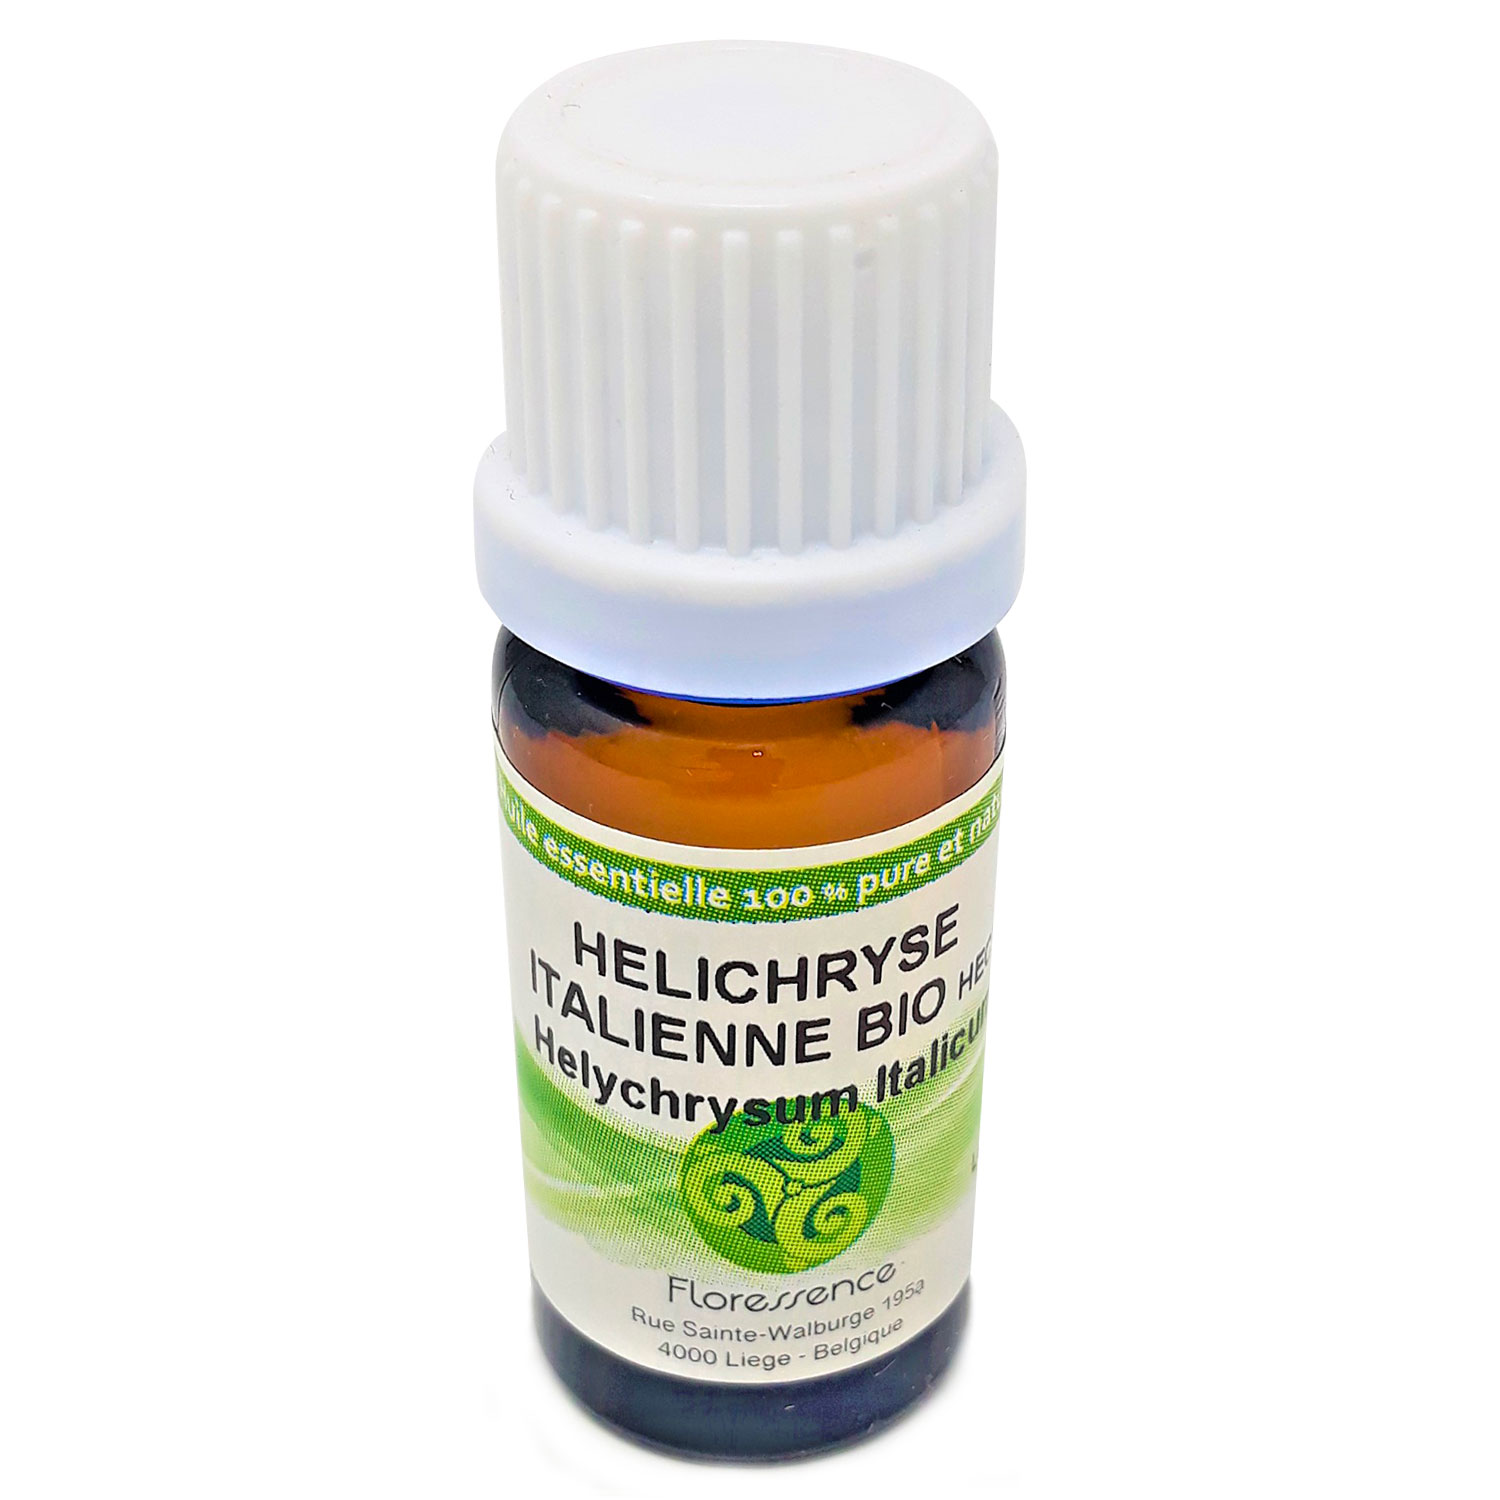 Produits d'hygiène: Huile essentielle Helichryse italienne Bio - 10ml